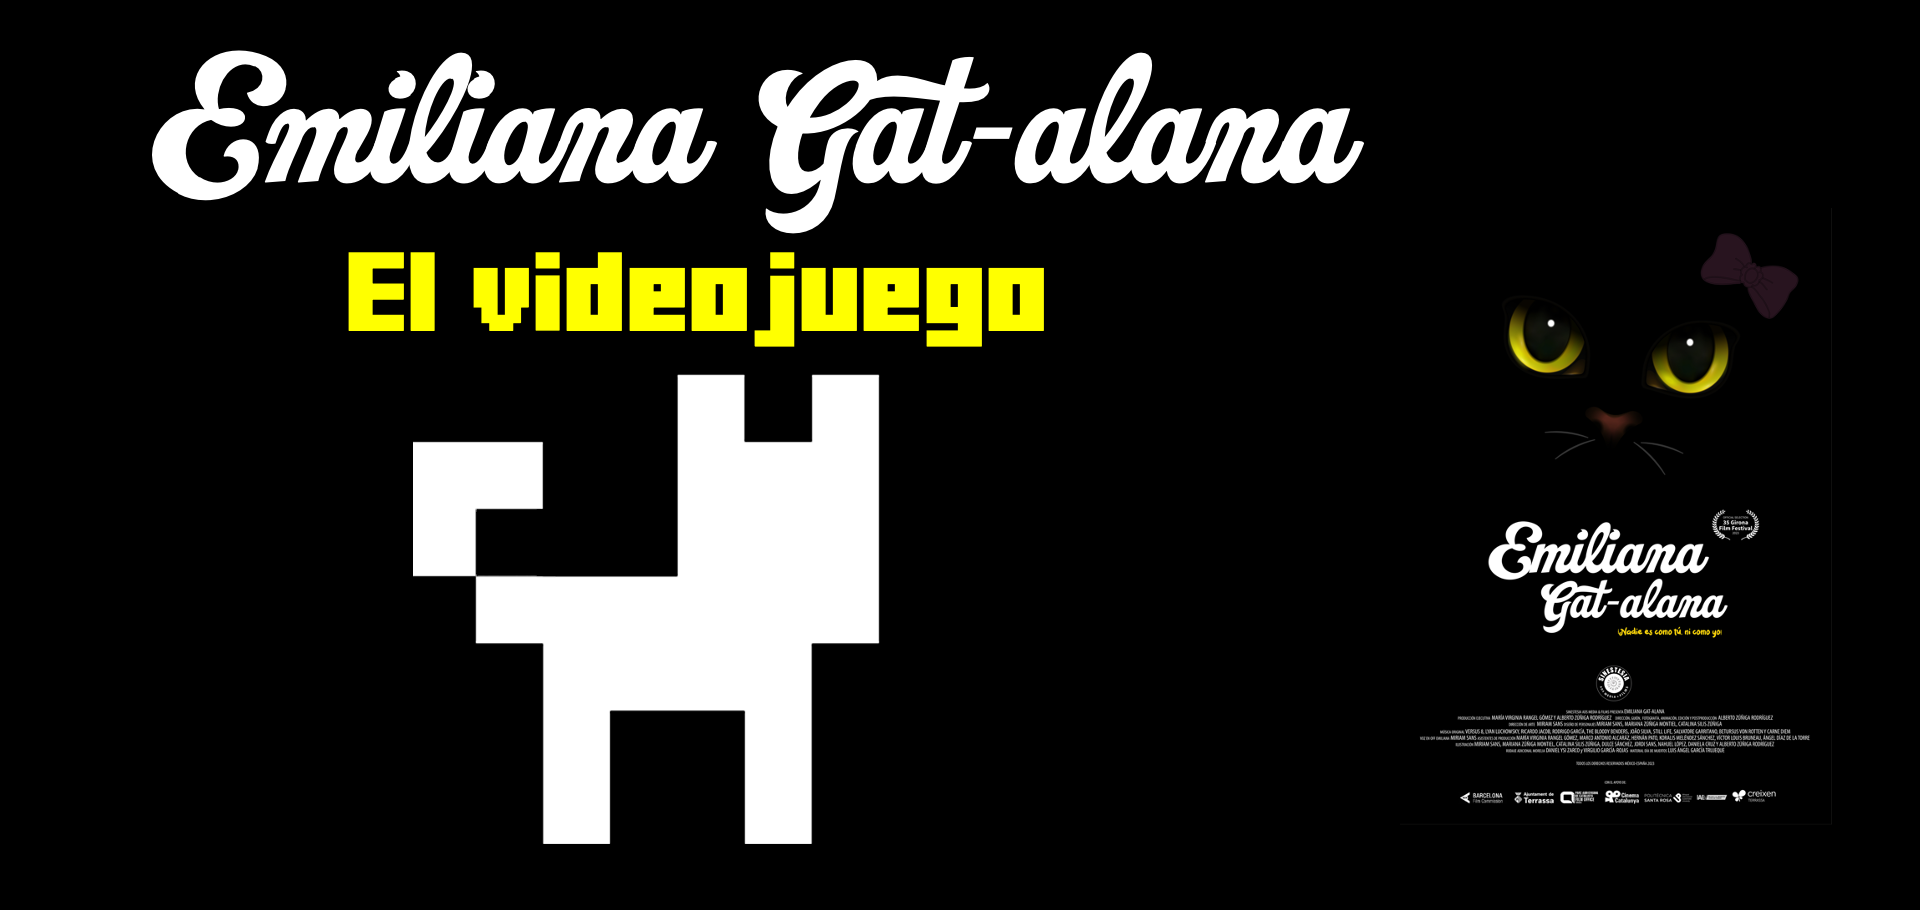 Emiliana Gat-alana, el videojuego